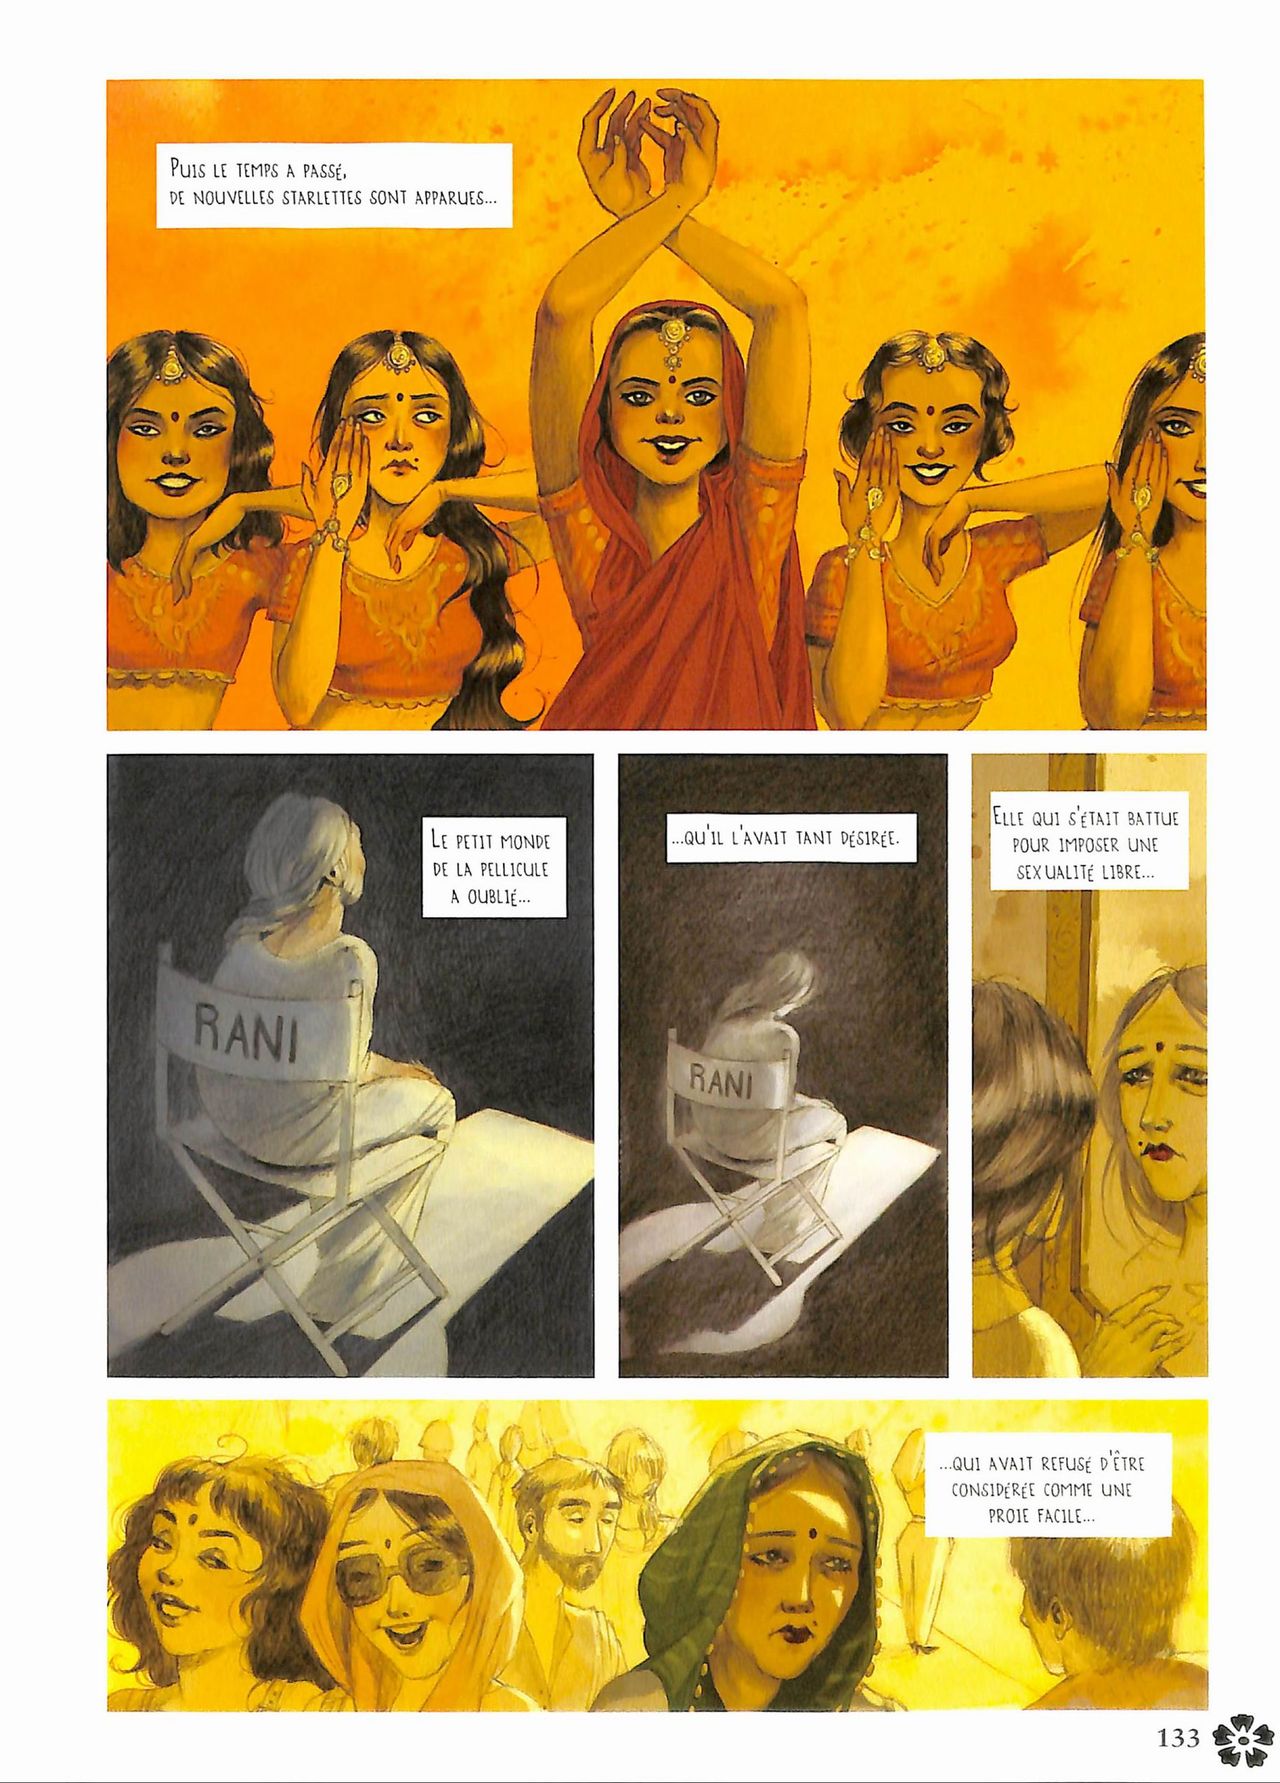 Kama Sutra en bandes dessinées - Kama Sutra with Comics numero d'image 133